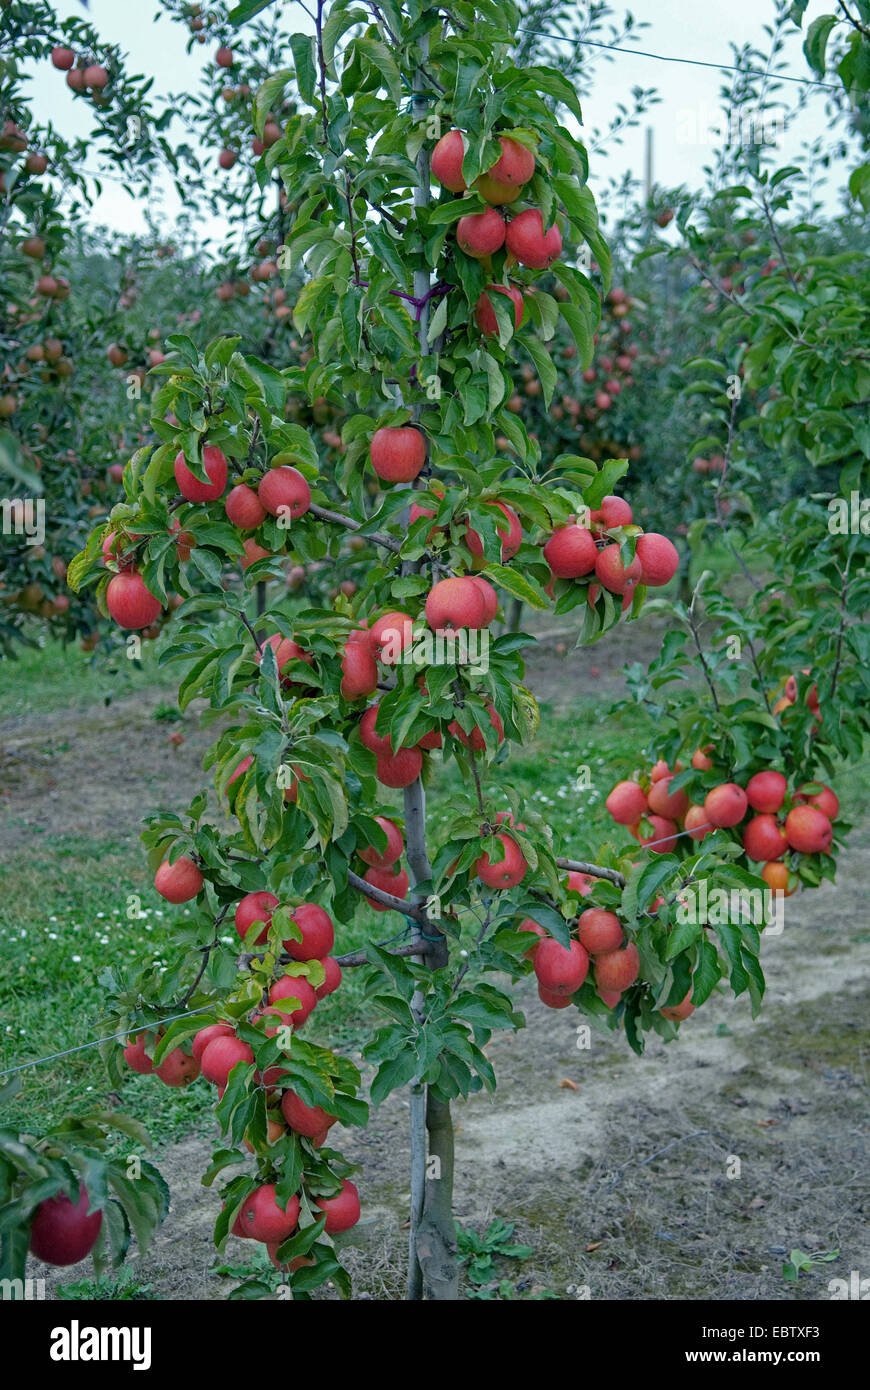 Apfelbaum (Malus Domestica 'Pinova', Malus Domestica Pinova), Sorte Pinova,  Äpfel auf dem Baum Stockfotografie - Alamy